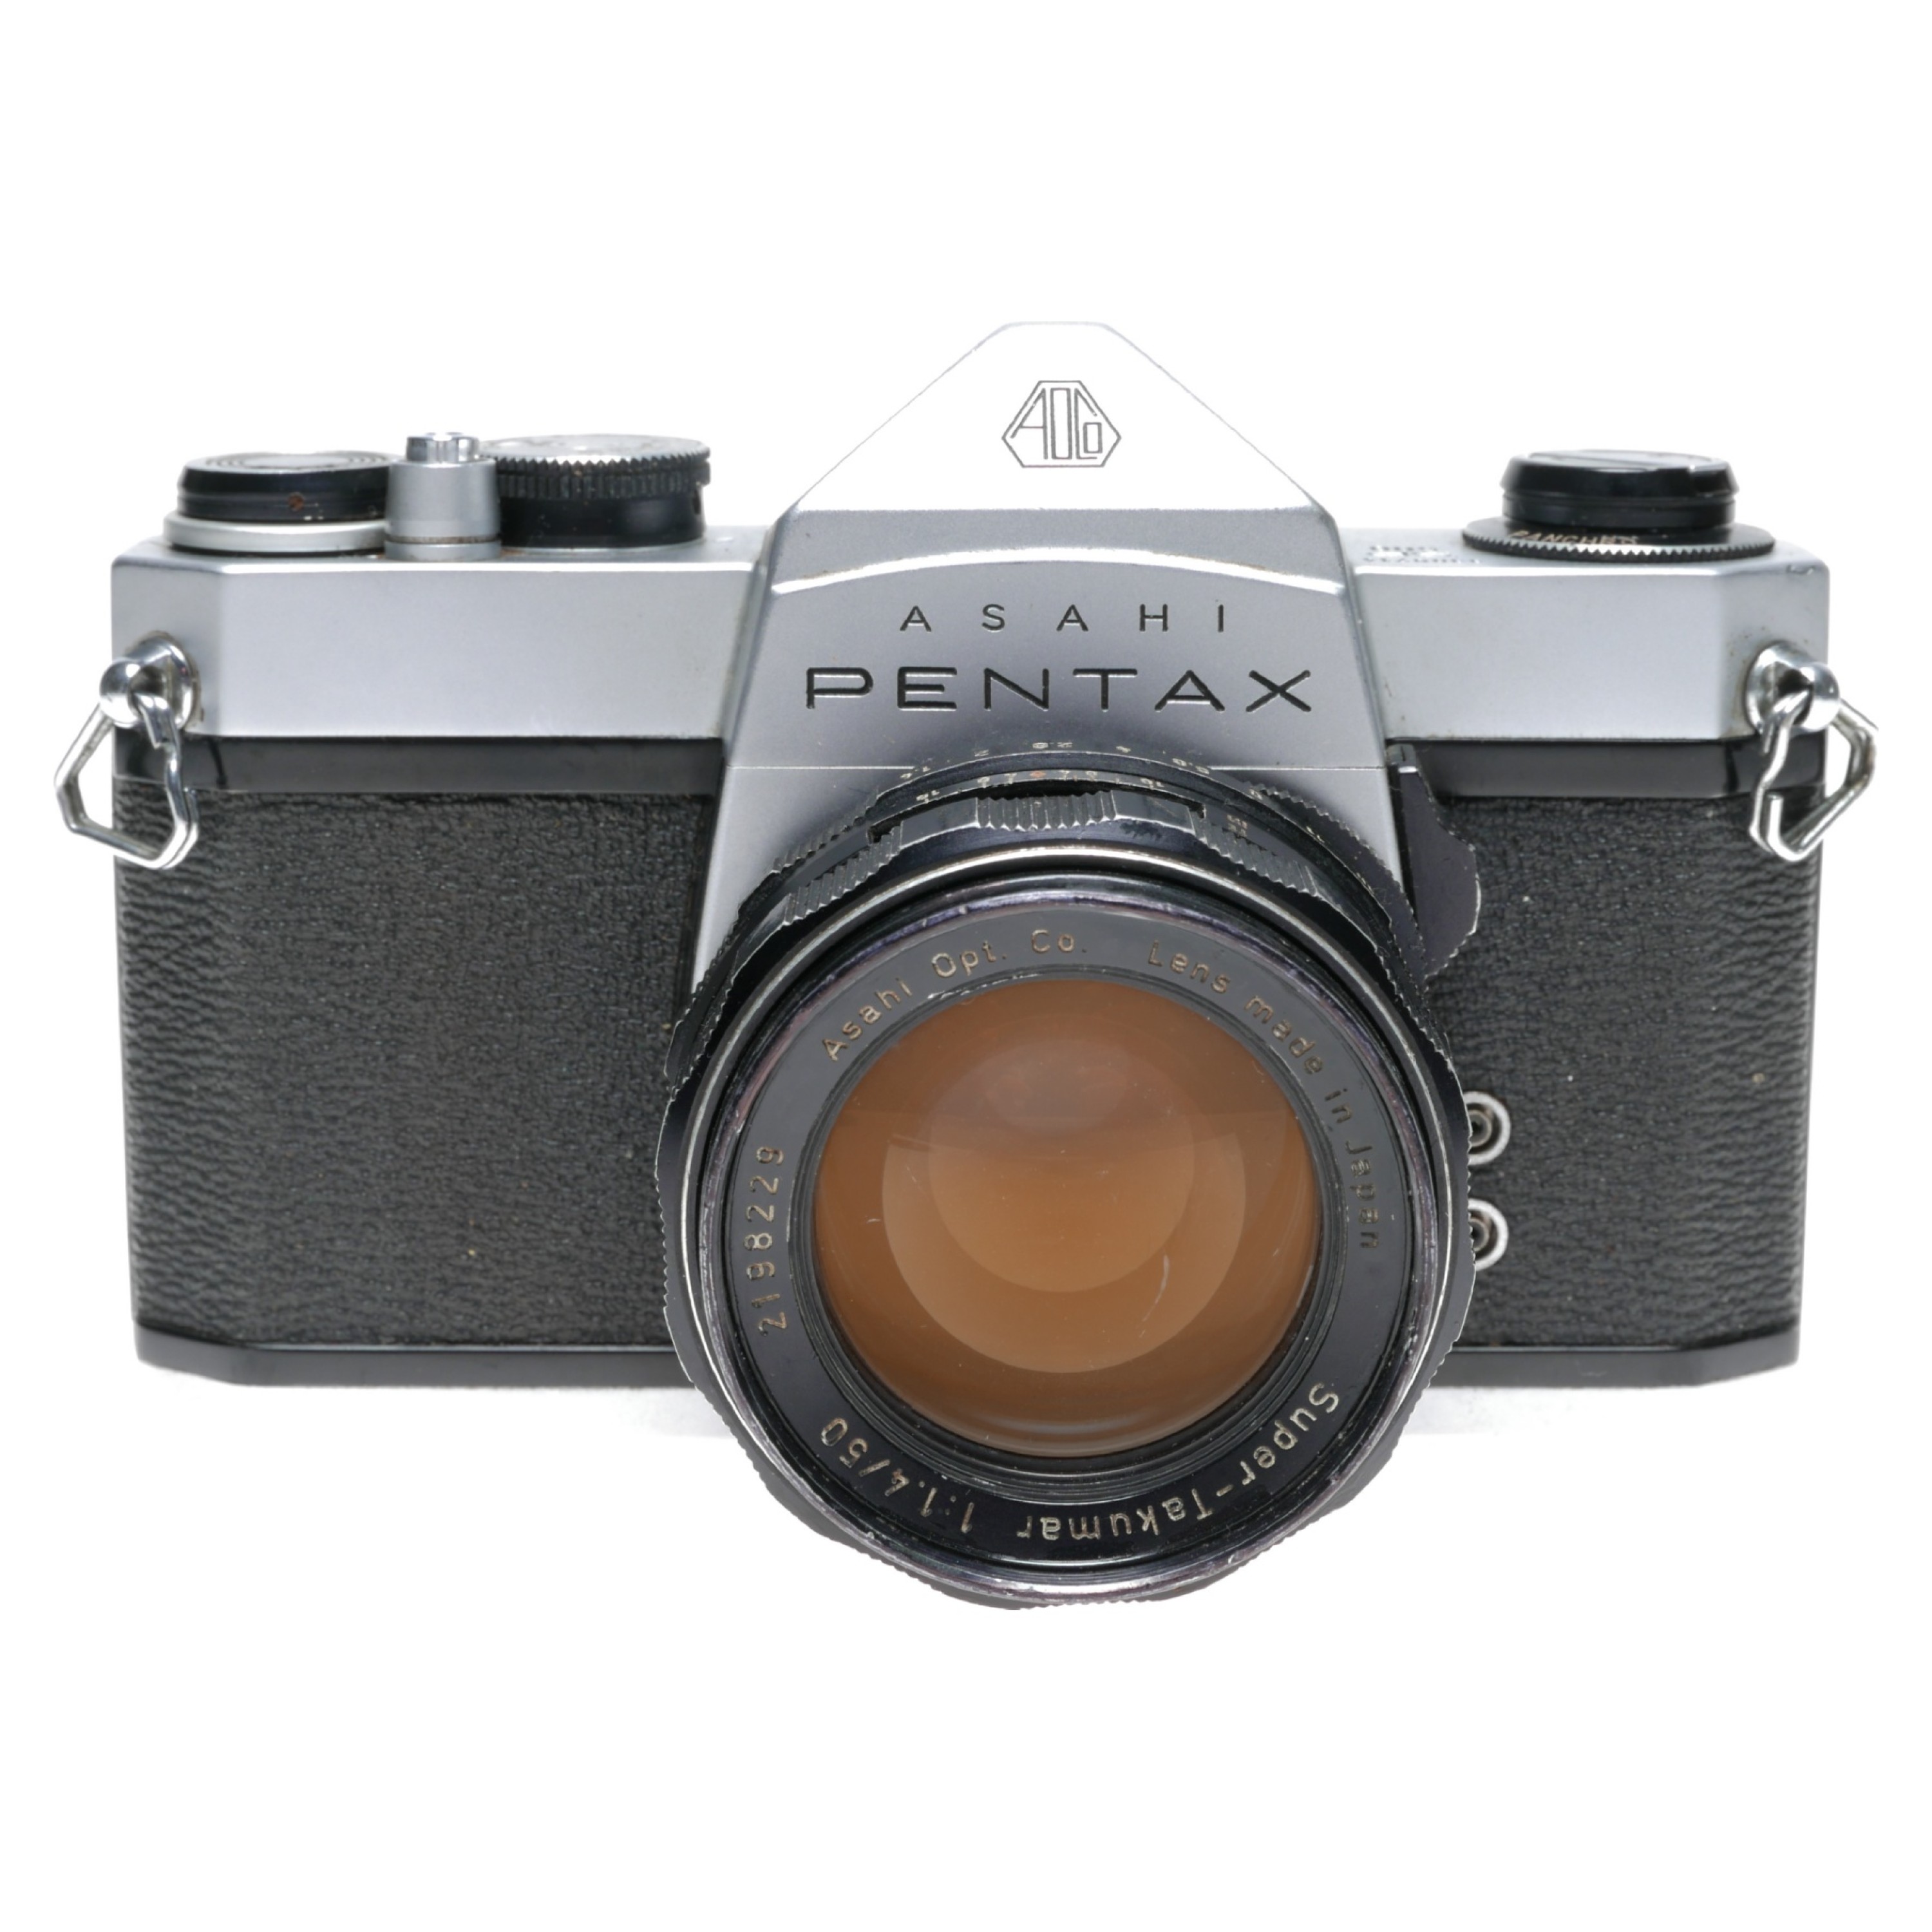 Asahi Pentax SP 500 Spotmatic SLR Film Camera 1.4/50 Super-Takumar